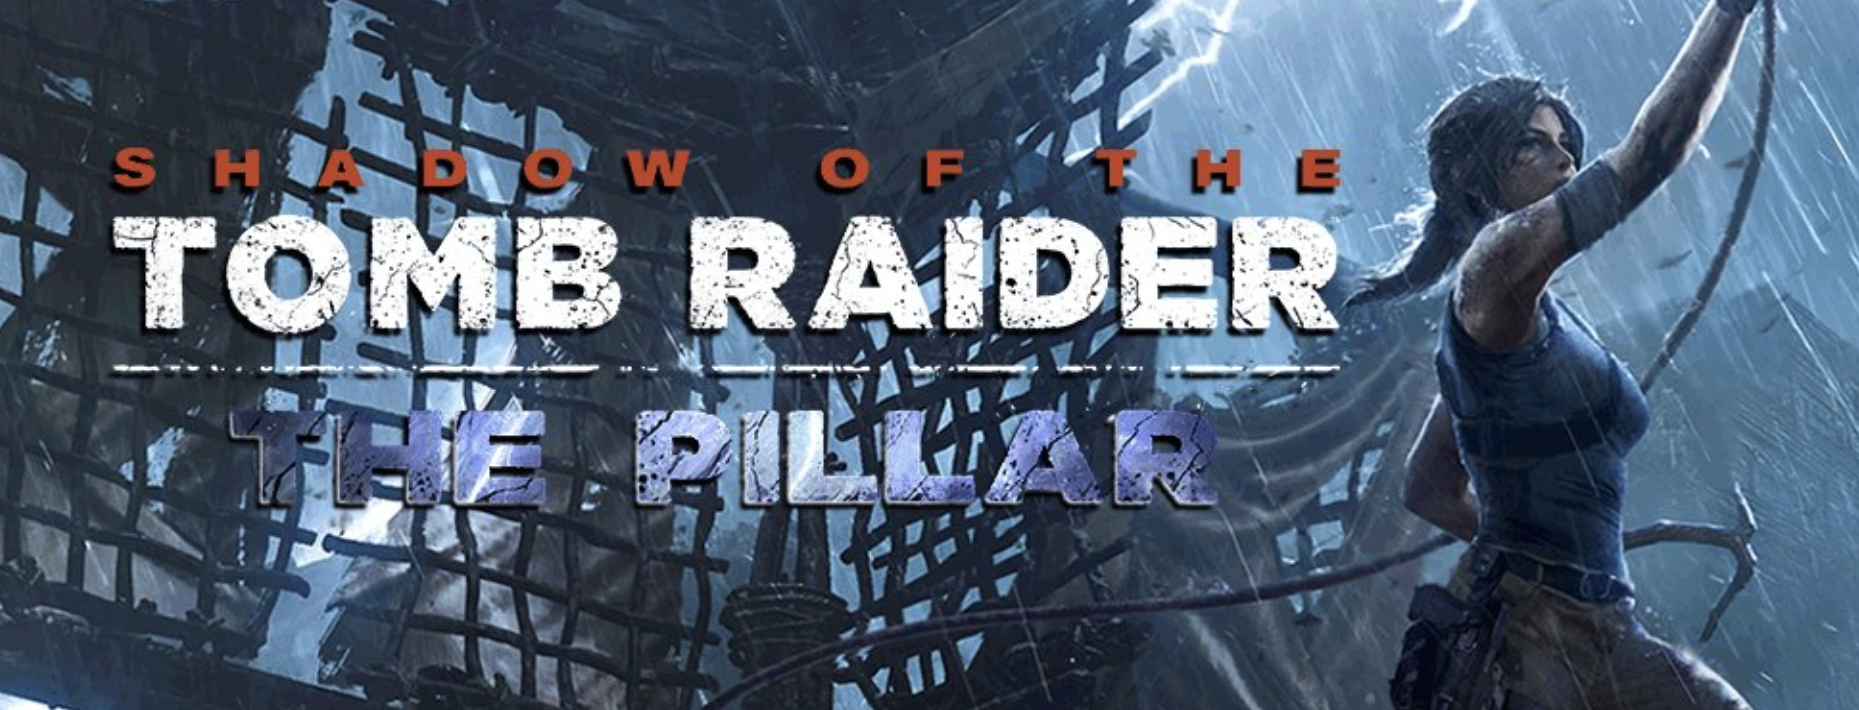 Tomb raider ps4 купить. Shadow of the Tomb Raider: the Pillar. Shadow of the Tomb Raider DLC. Shadow of the Tomb Raider - the Pillar диск. Как спасти белую королеву Shadow of the Tomb Raider.